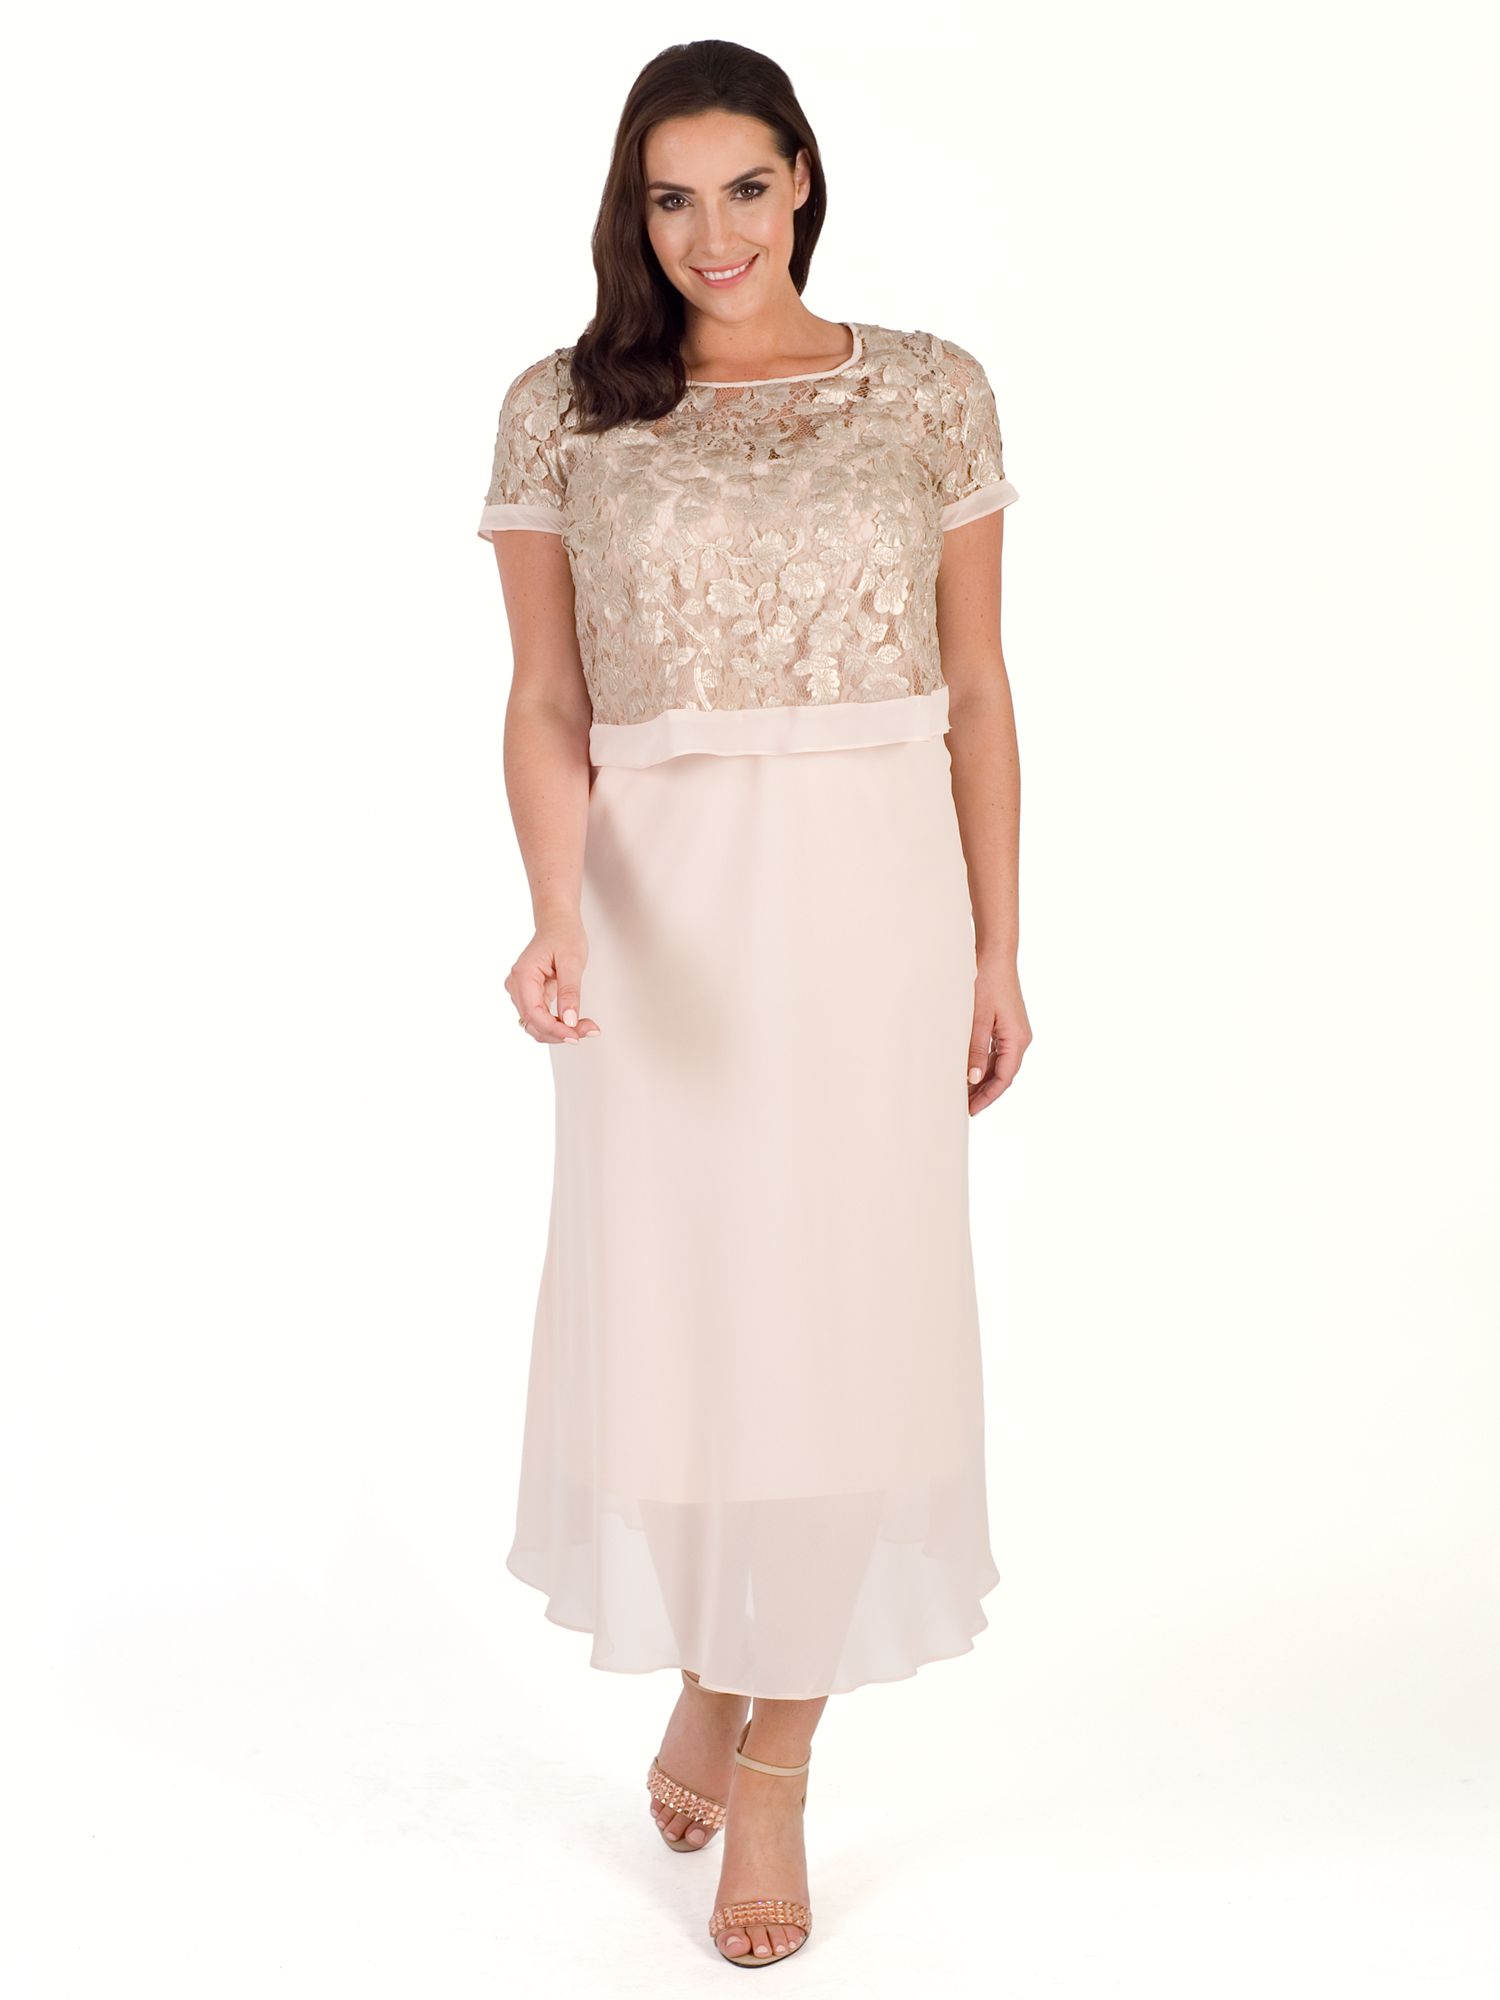 Chesca Trellis Applique Lace And Chiffon Dress, Pink